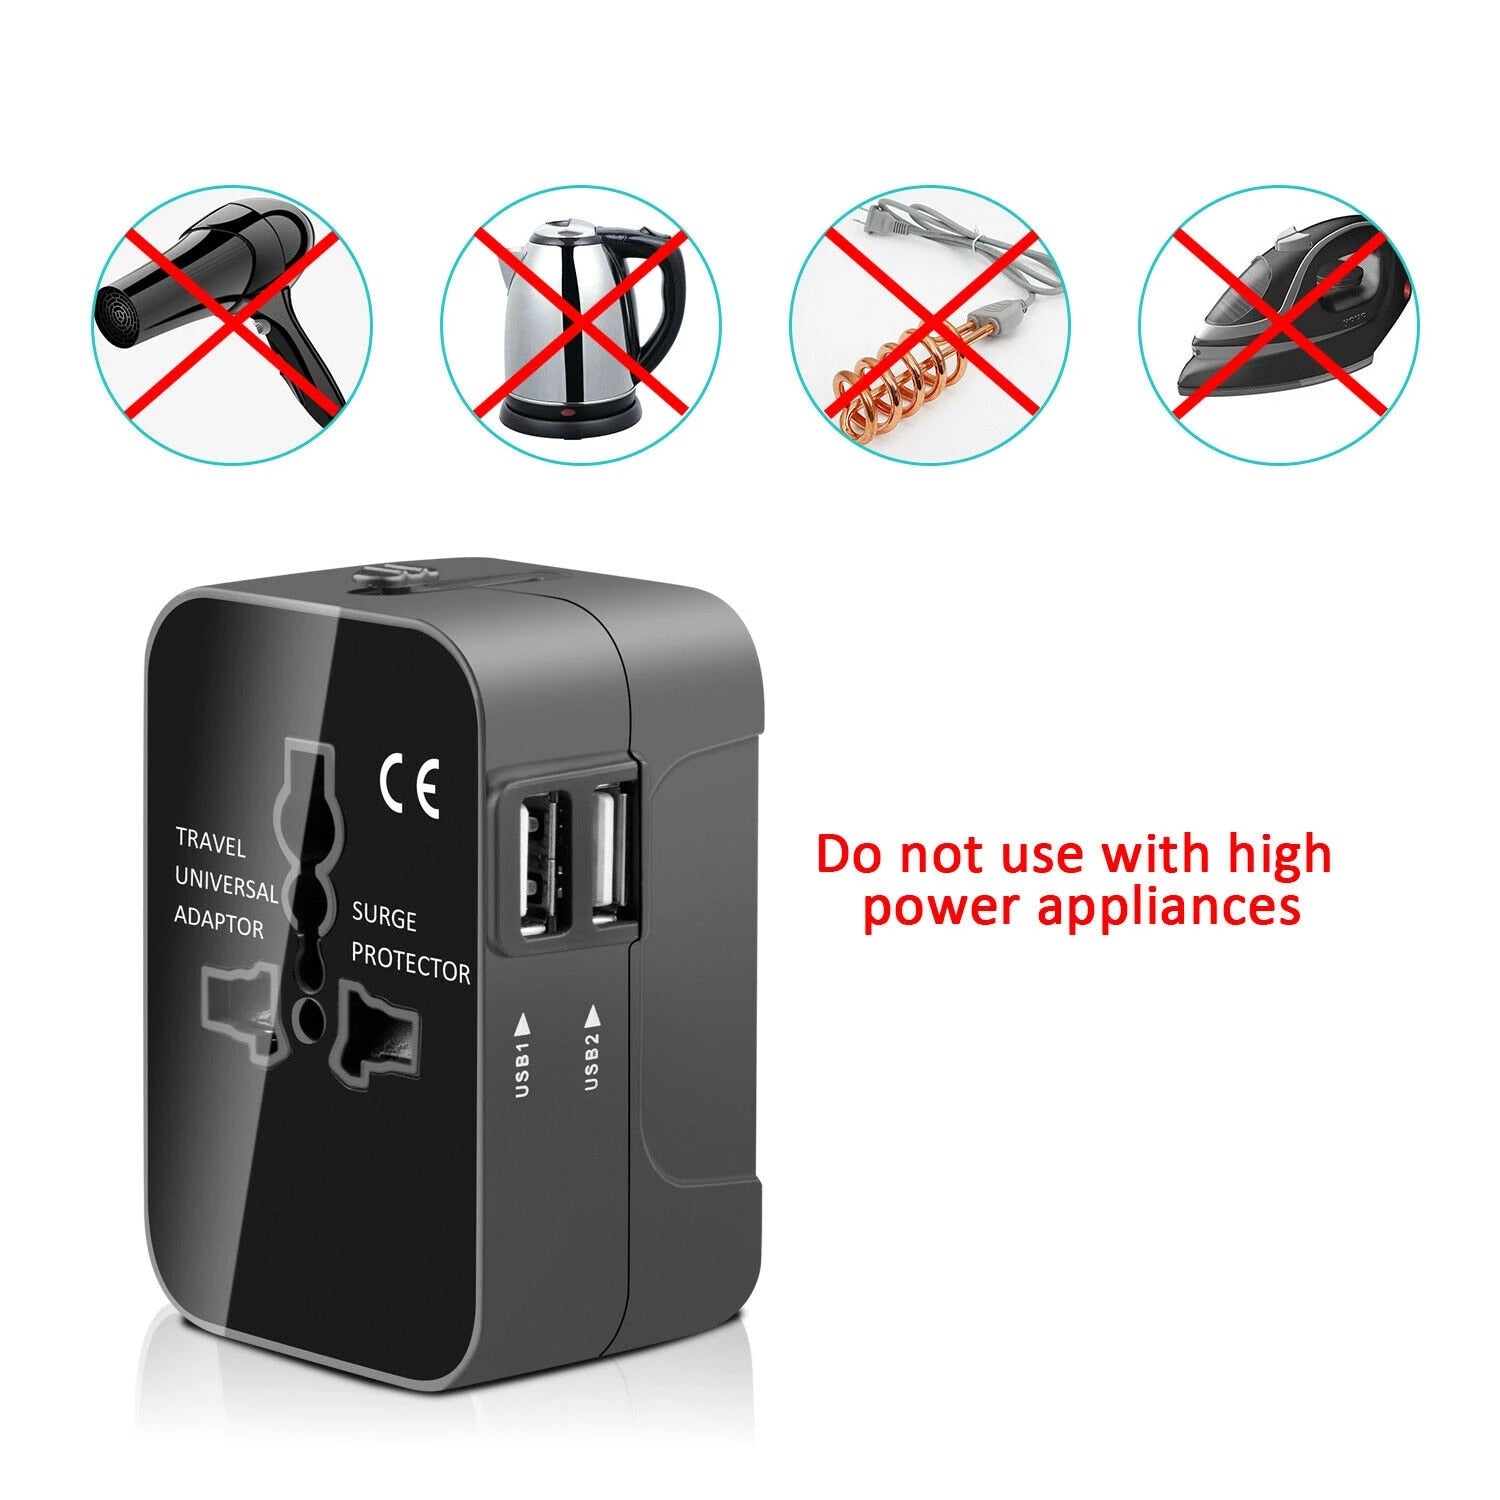 Universal Charger Converter AC Power Adaptor US/UK/EU/AU Plug